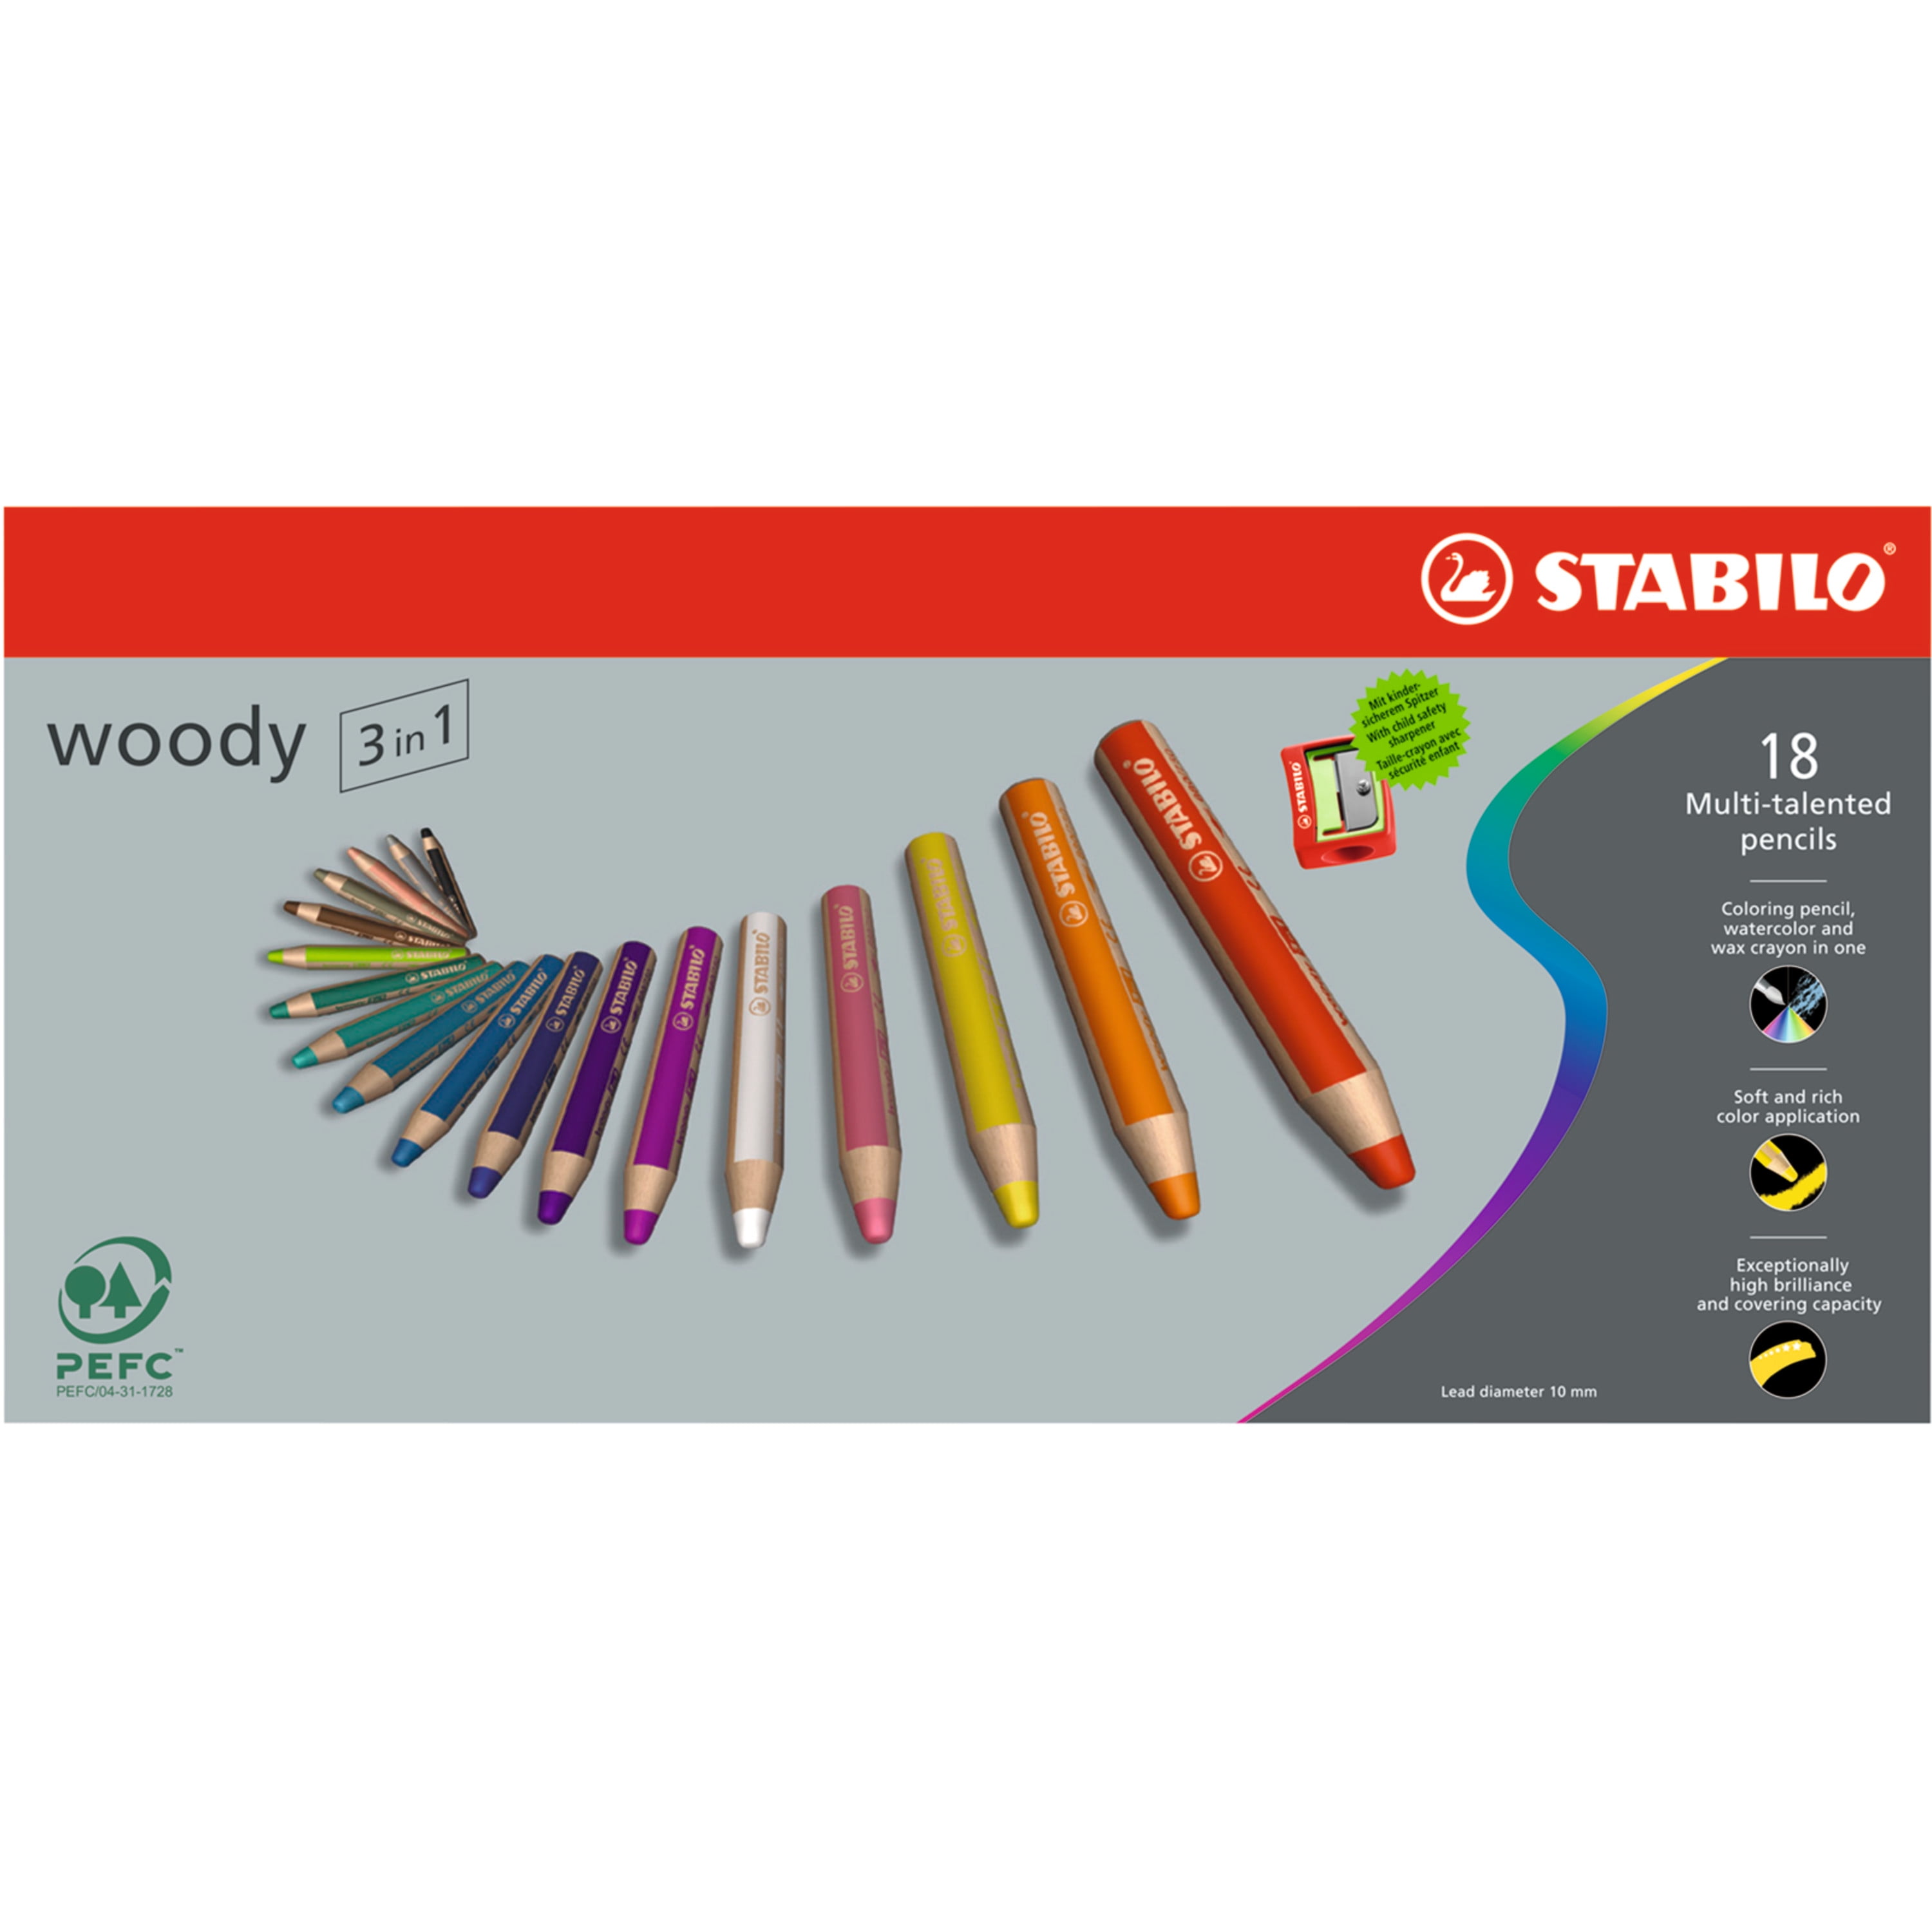 Stabilo Woody 3 in 1 Pencil - Black, BLICK Art Materials